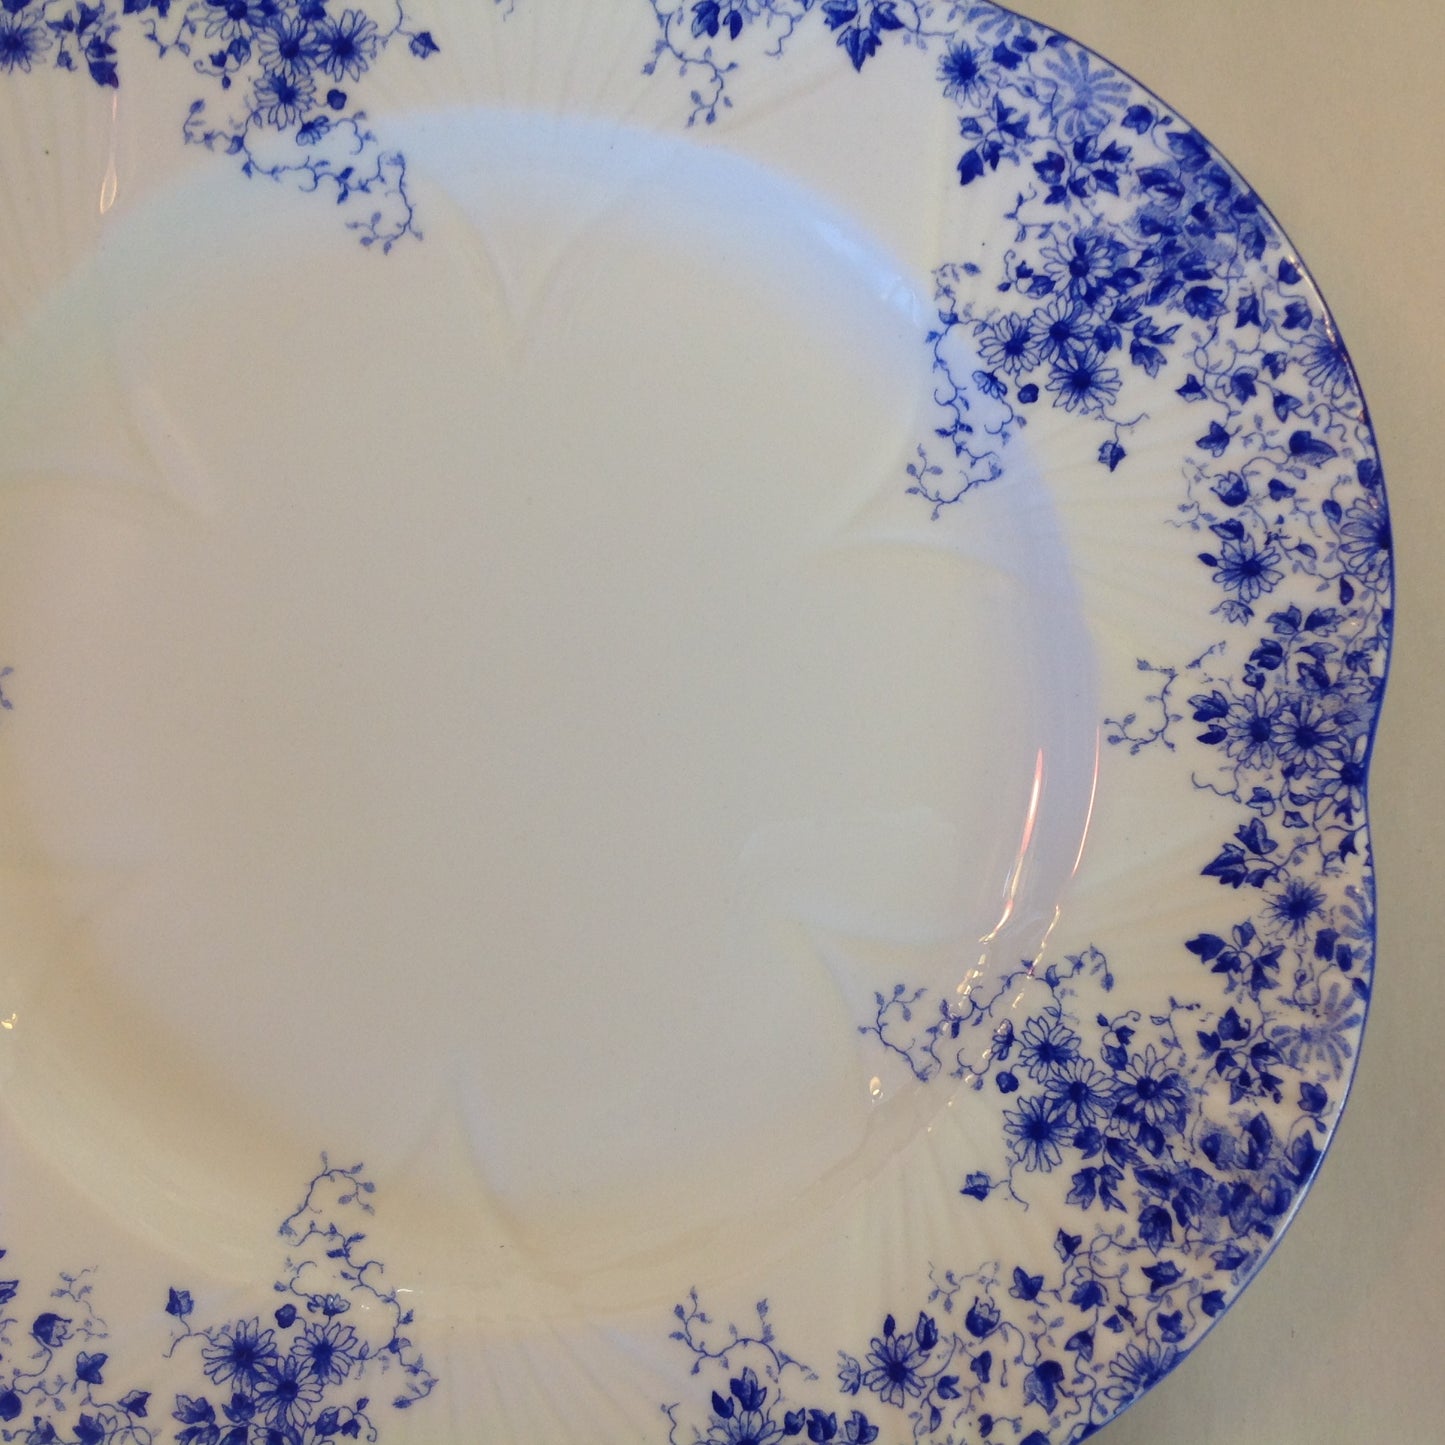 Antique Shelley Dainty Blue Fine Bone China Dinner Plate